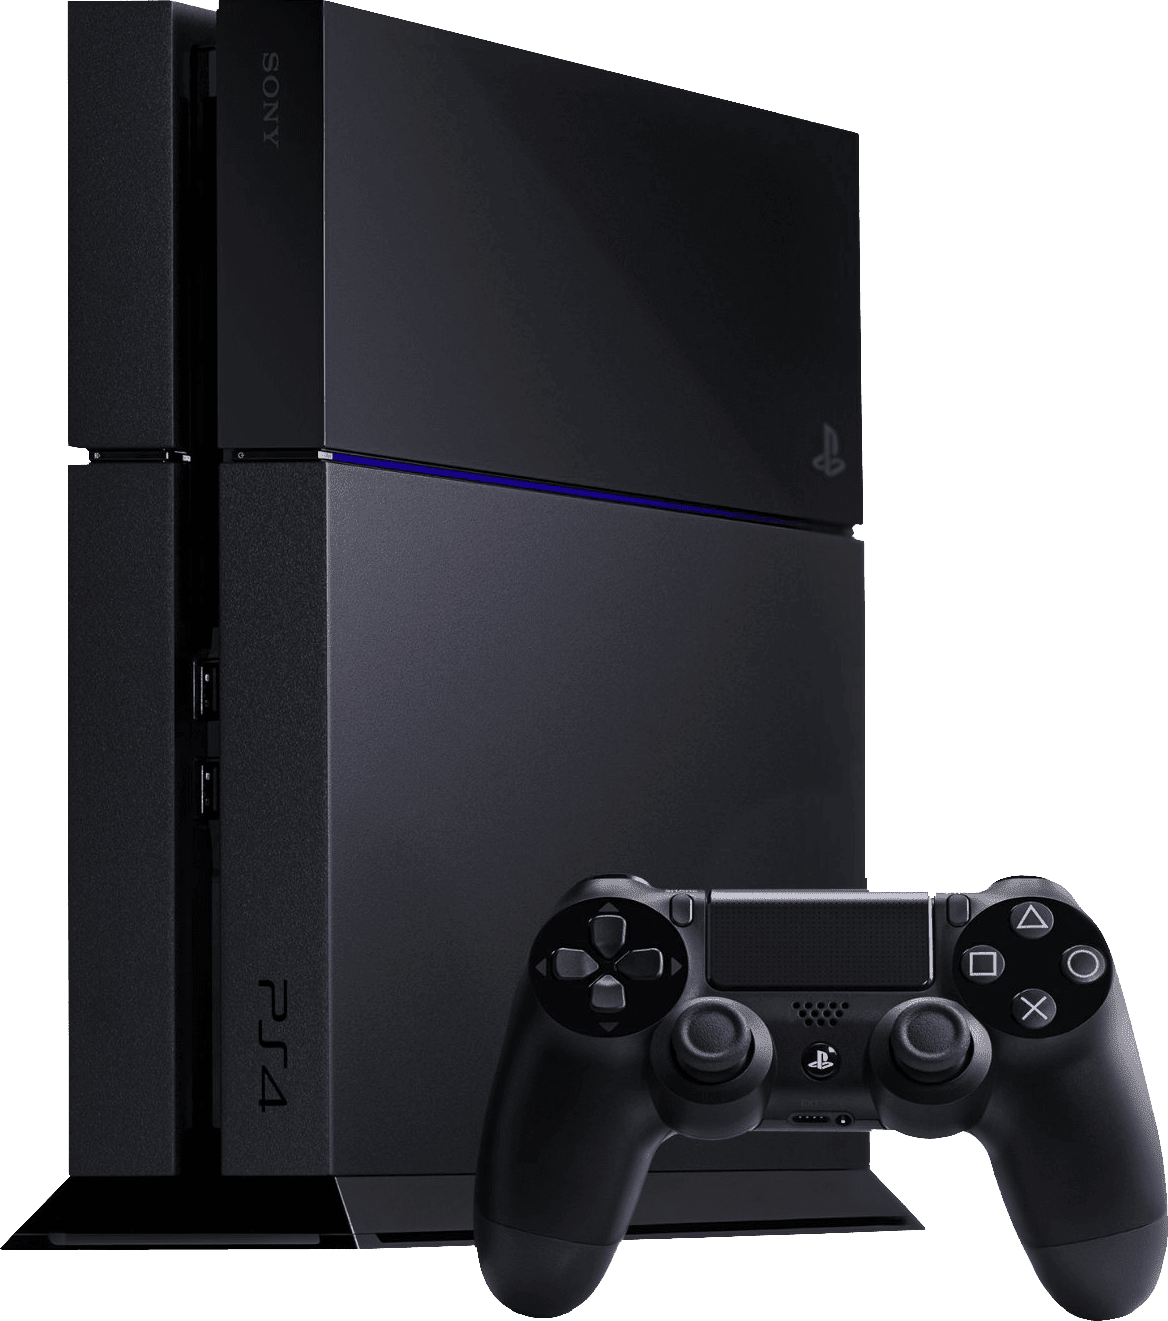 PlayStation 4 Slim 确认为真品； 在这里观看它的启动 - 查看新图像的尺寸比较